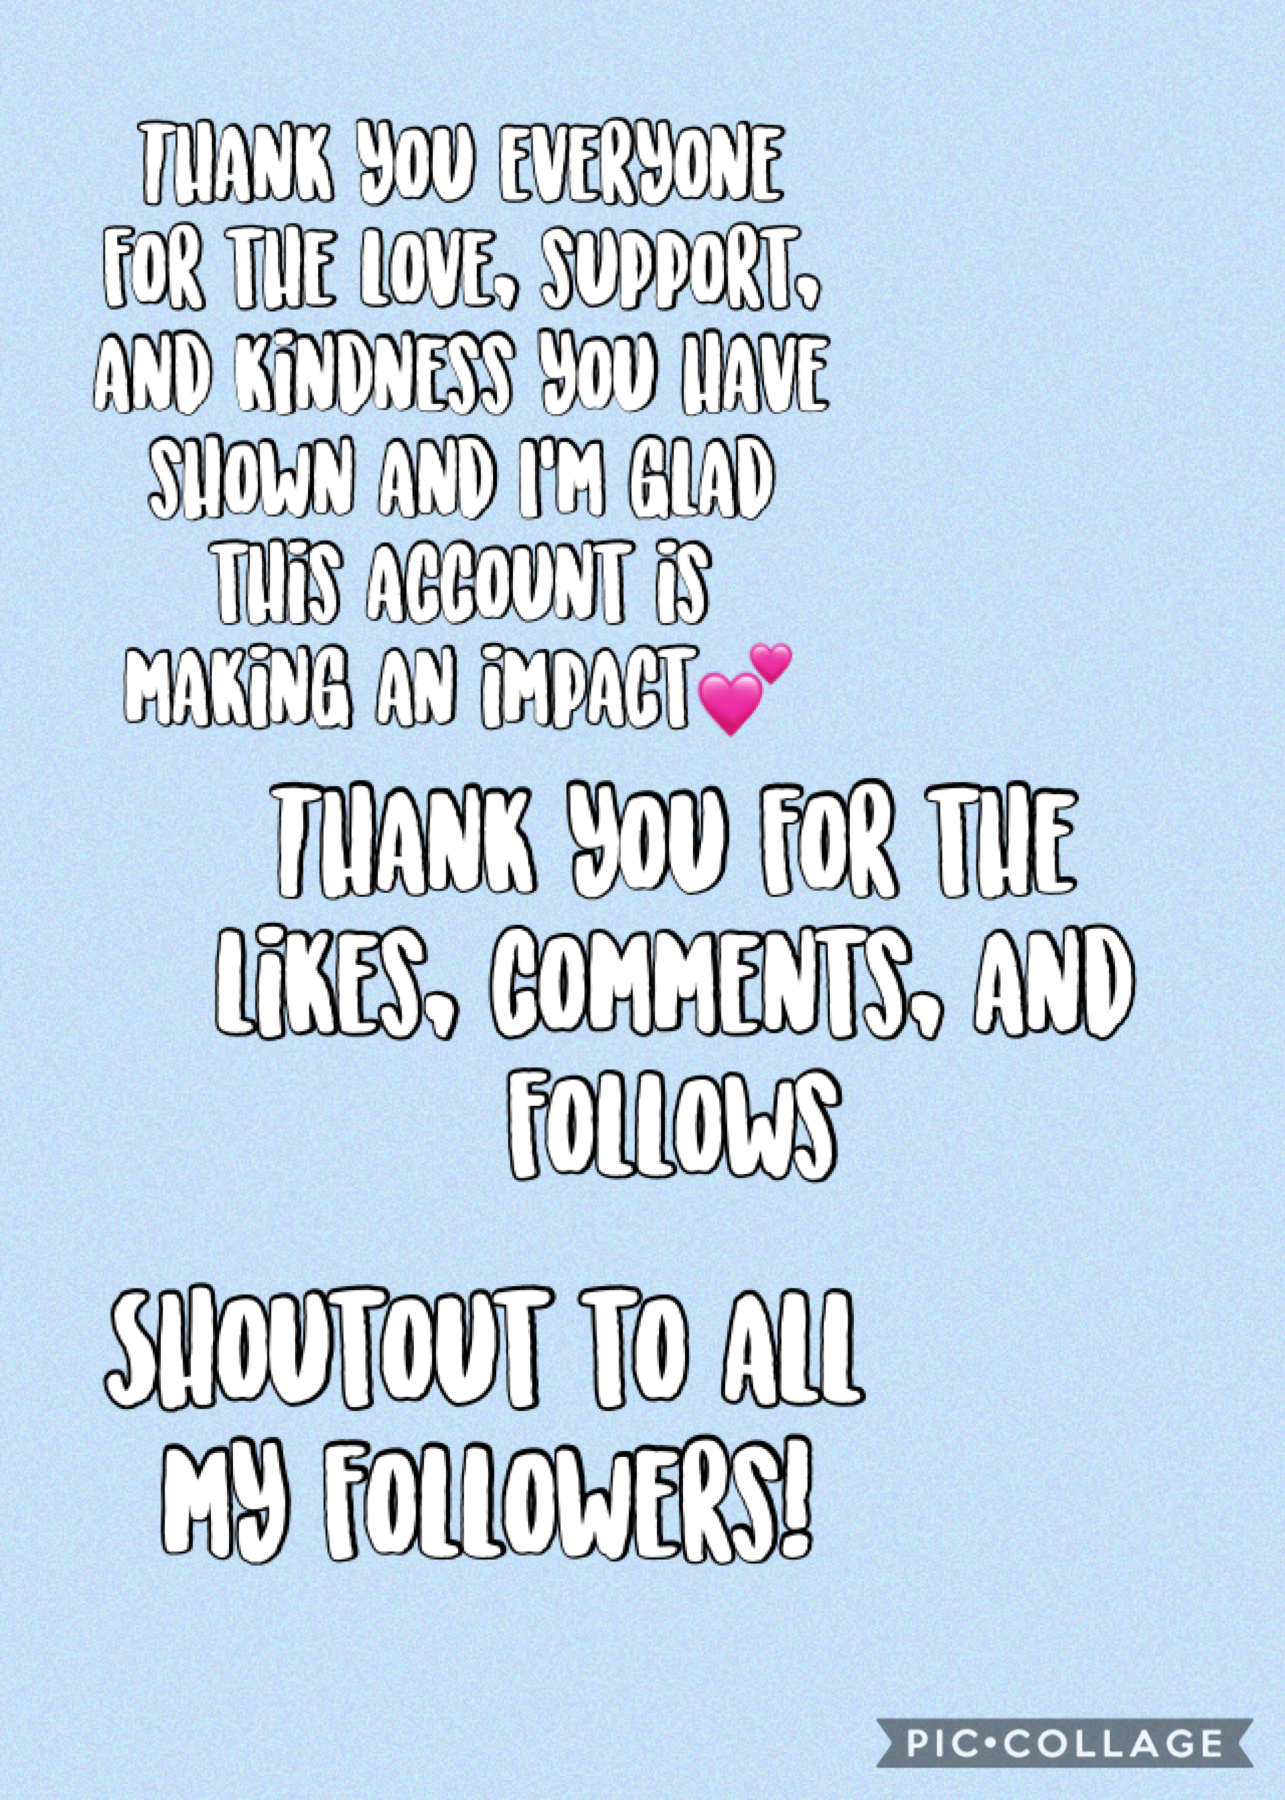 Thank you thank you thank you!!!💕